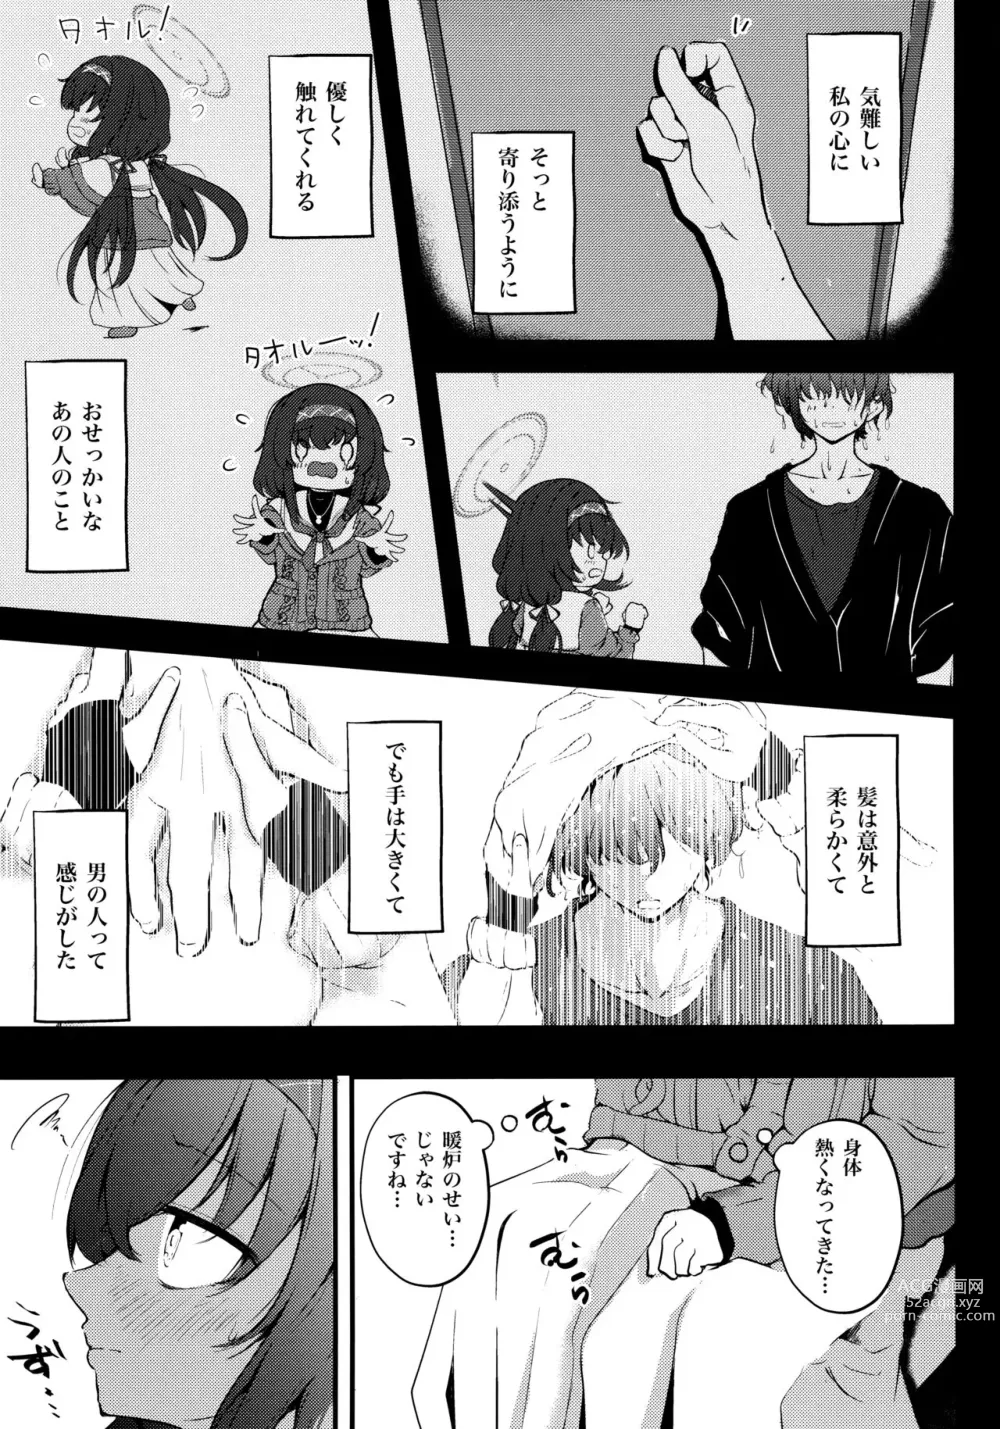 Page 6 of doujinshi Niwakaame, Tokidoki, Koiwazurai. - Sudden showers, moments of reflection.